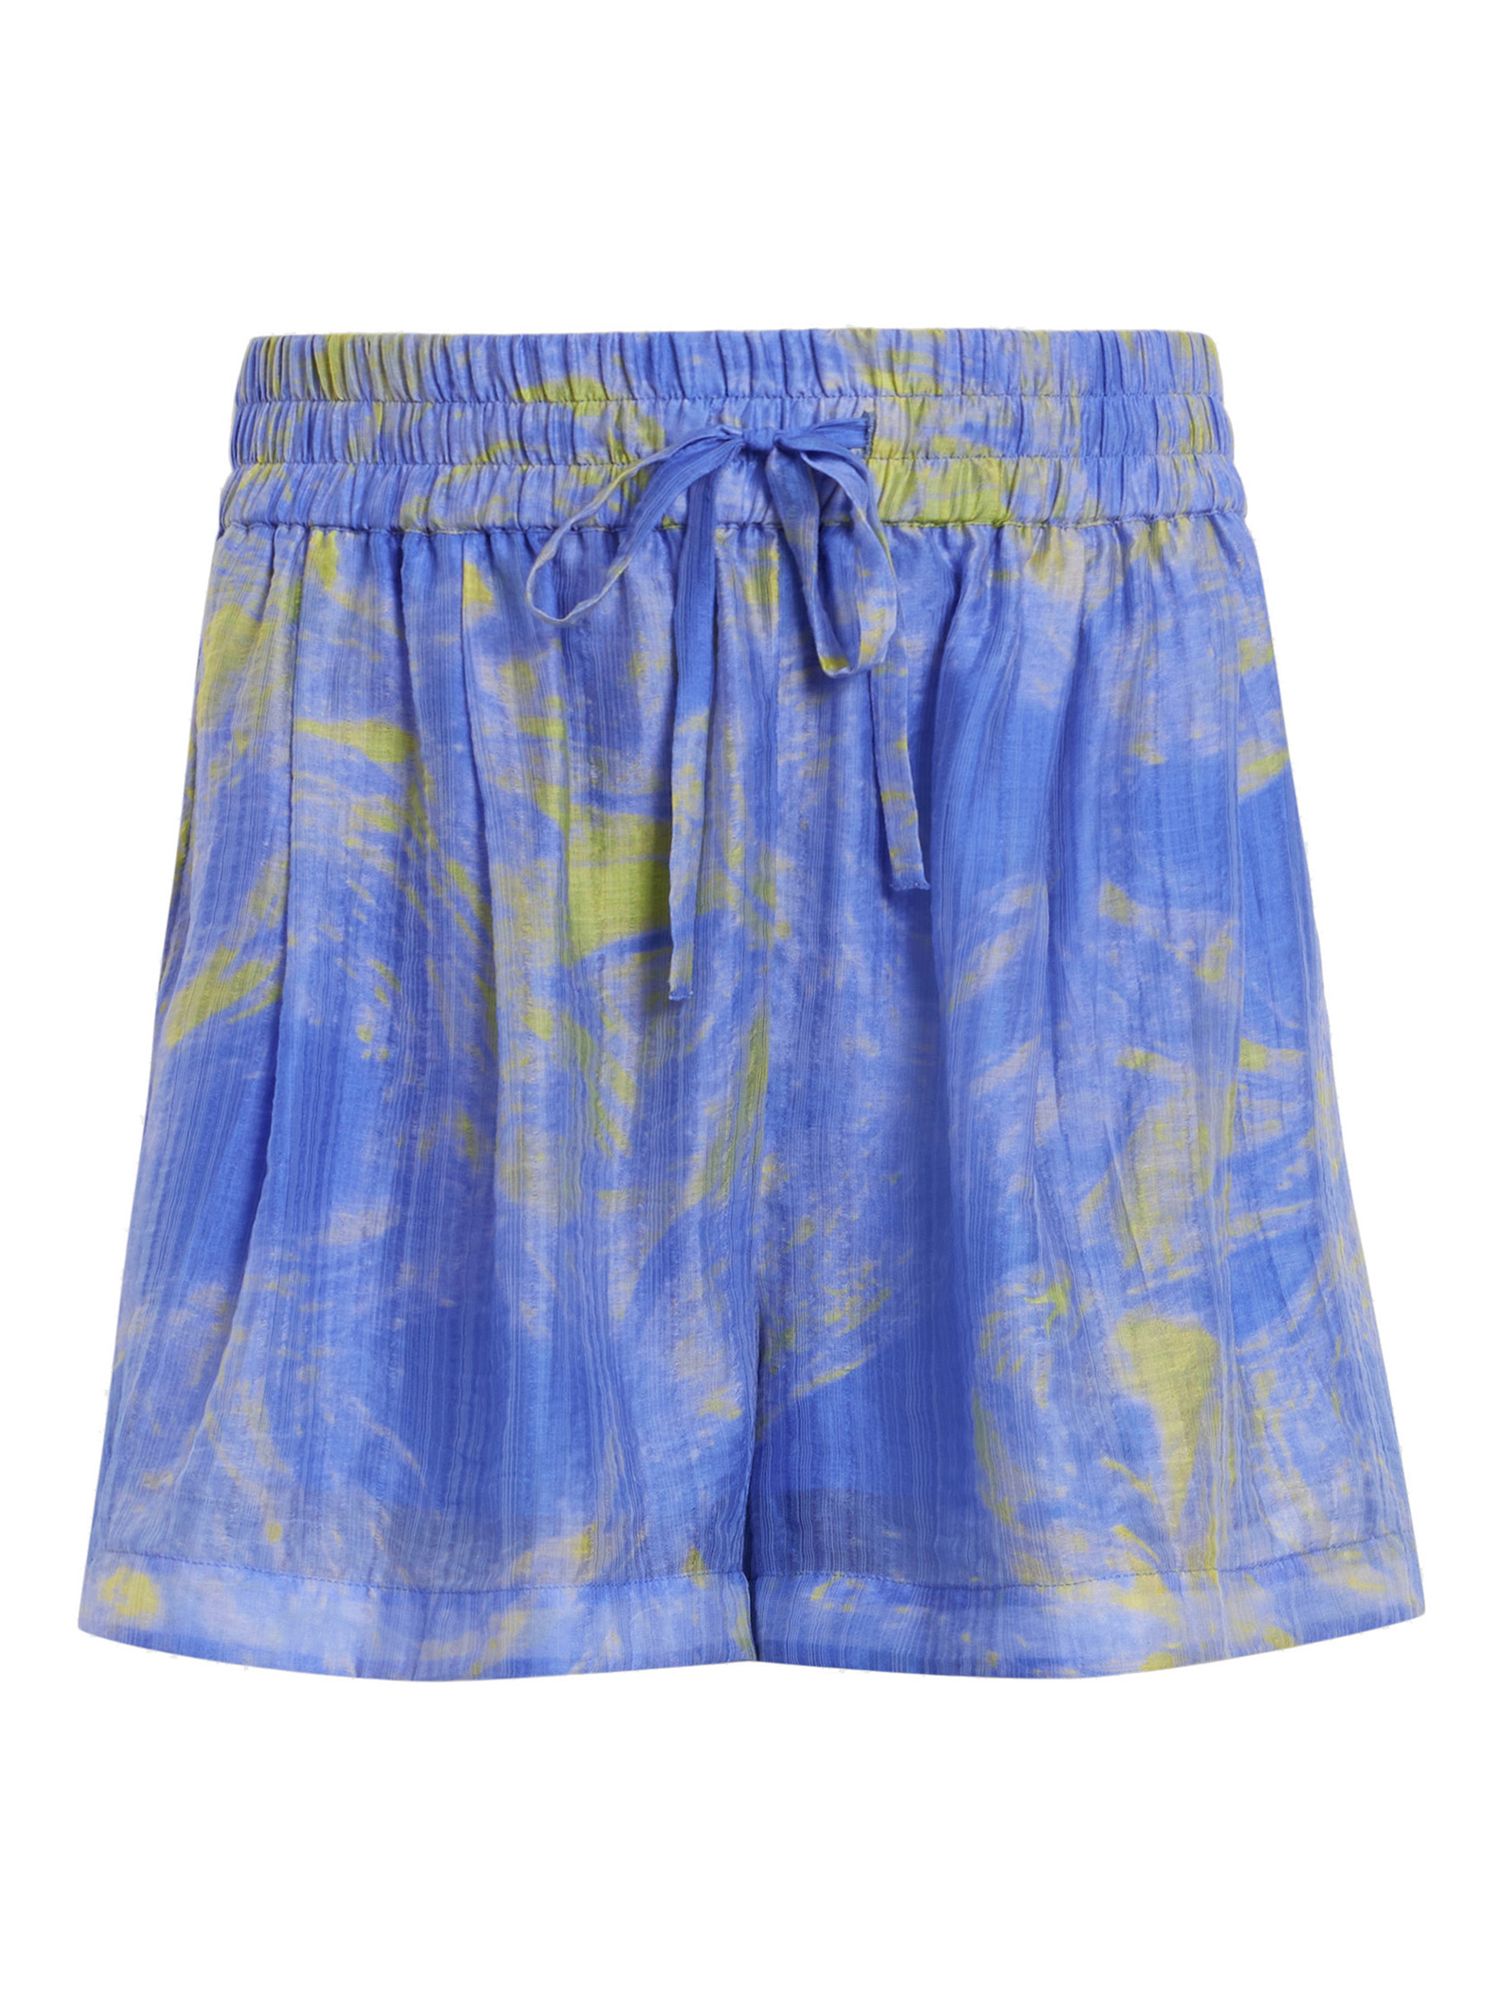 AllSaints Isla Abstract Print Drawstring Shorts, Electric Blue/Multi, 10